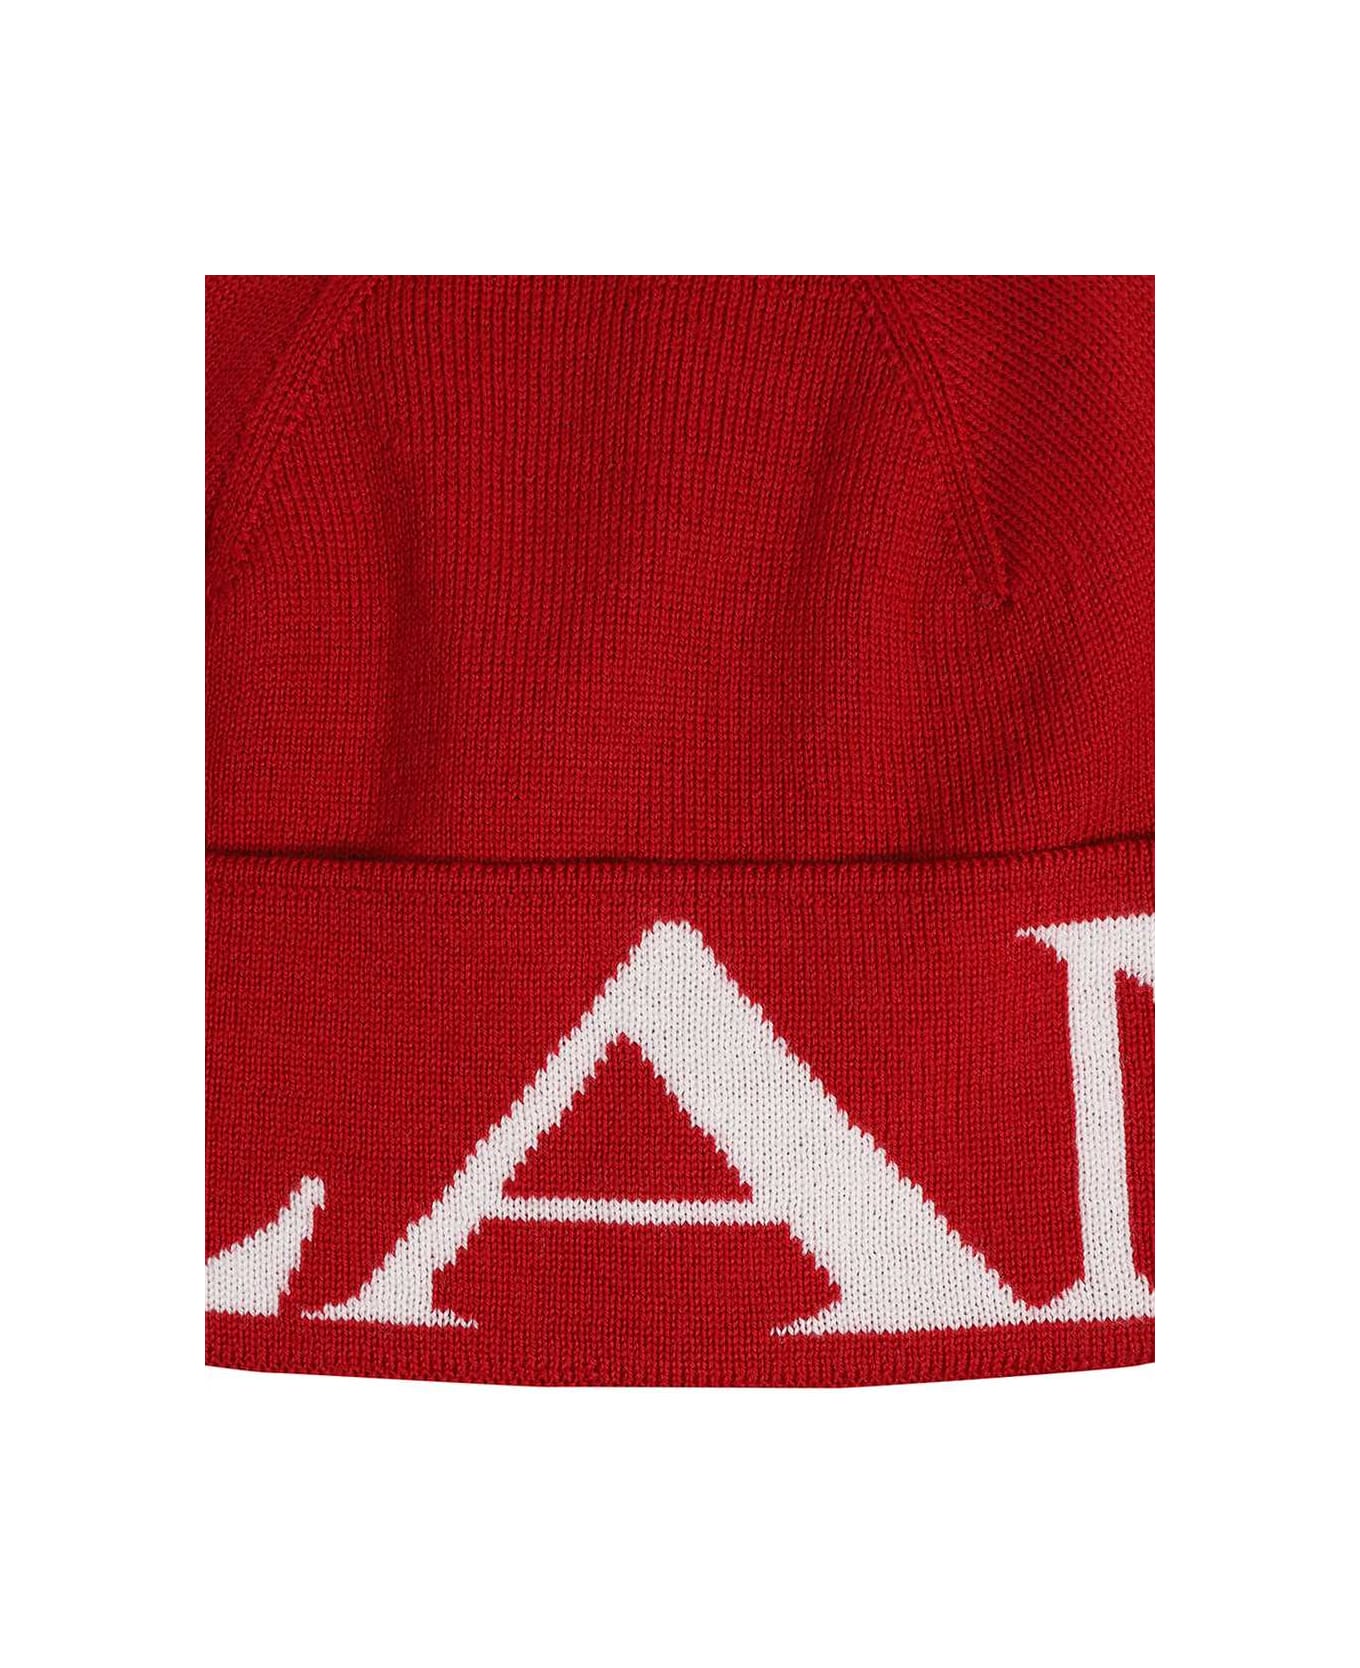 Lanvin Wool Hat - red